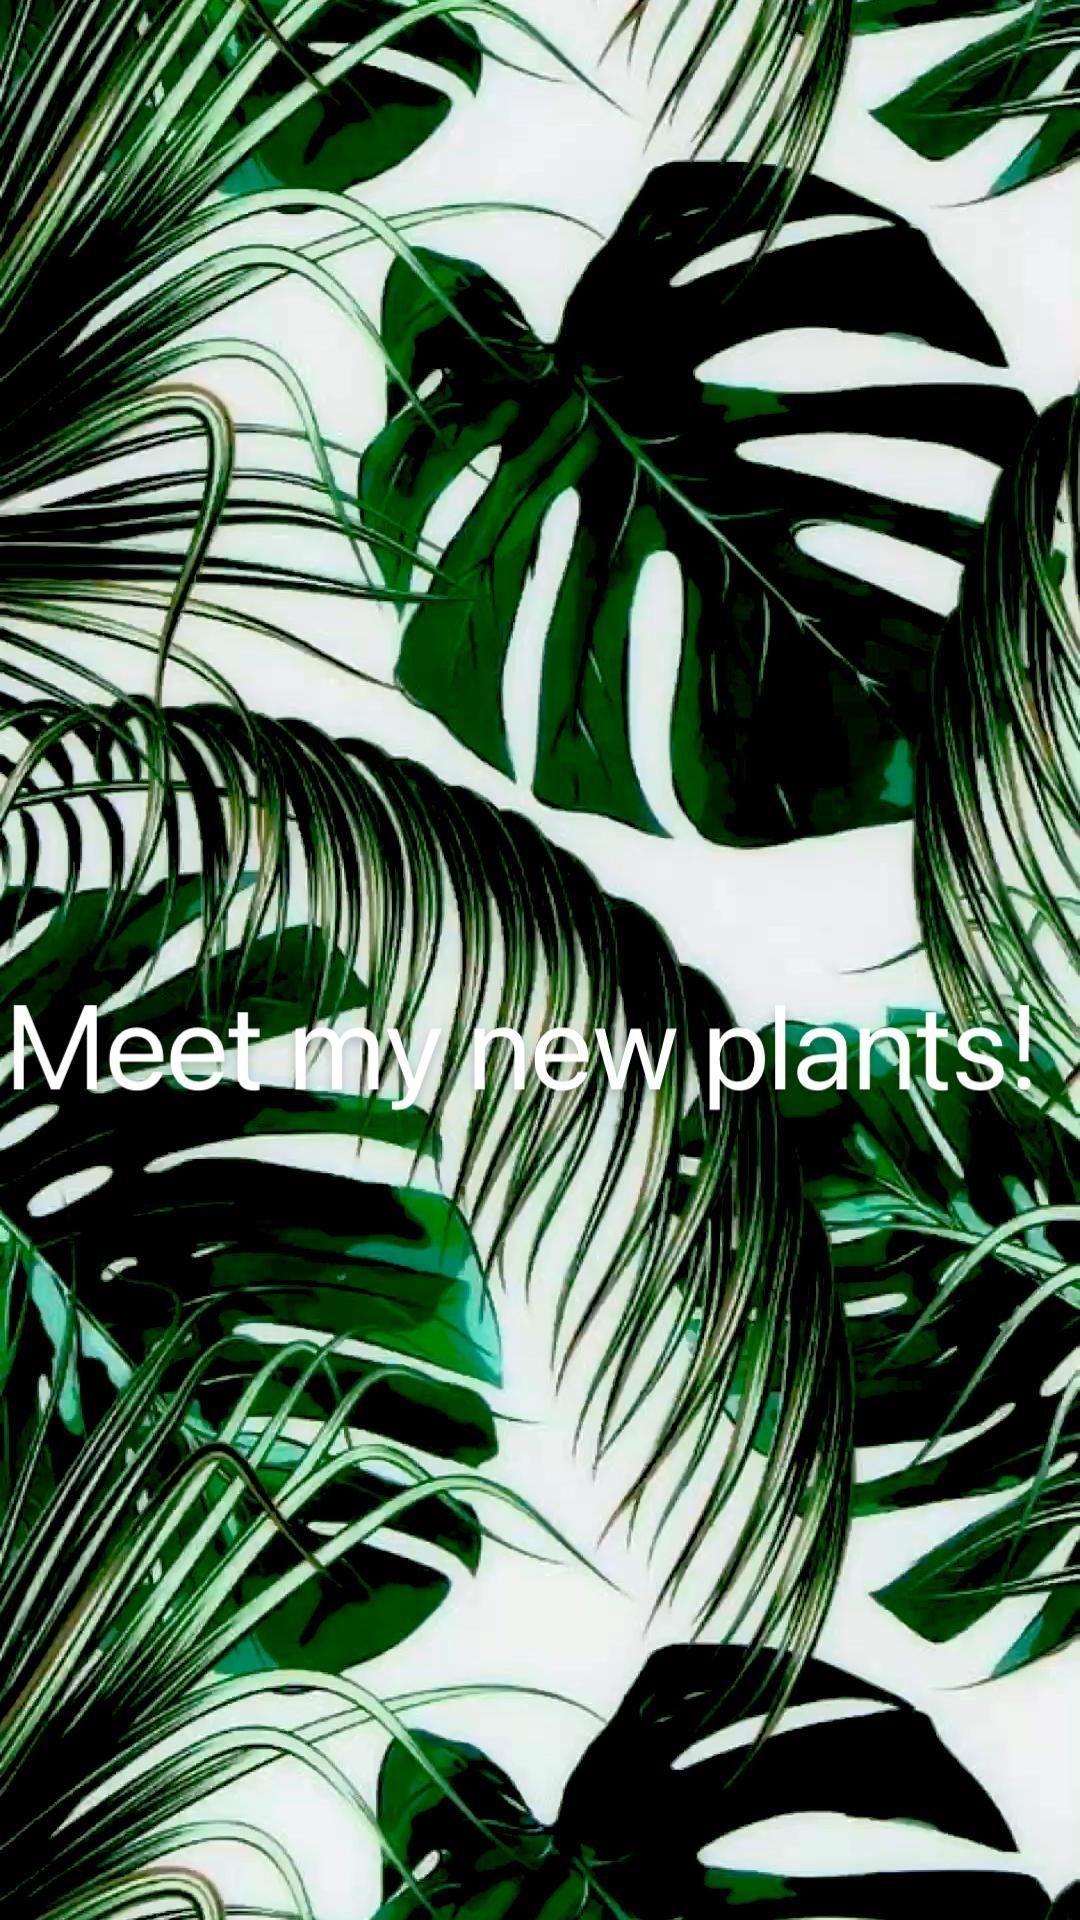 Meet my new plants!. Leaves wallpaper iphone, Aesthetic iphone wallpaper, Summer wallpaper